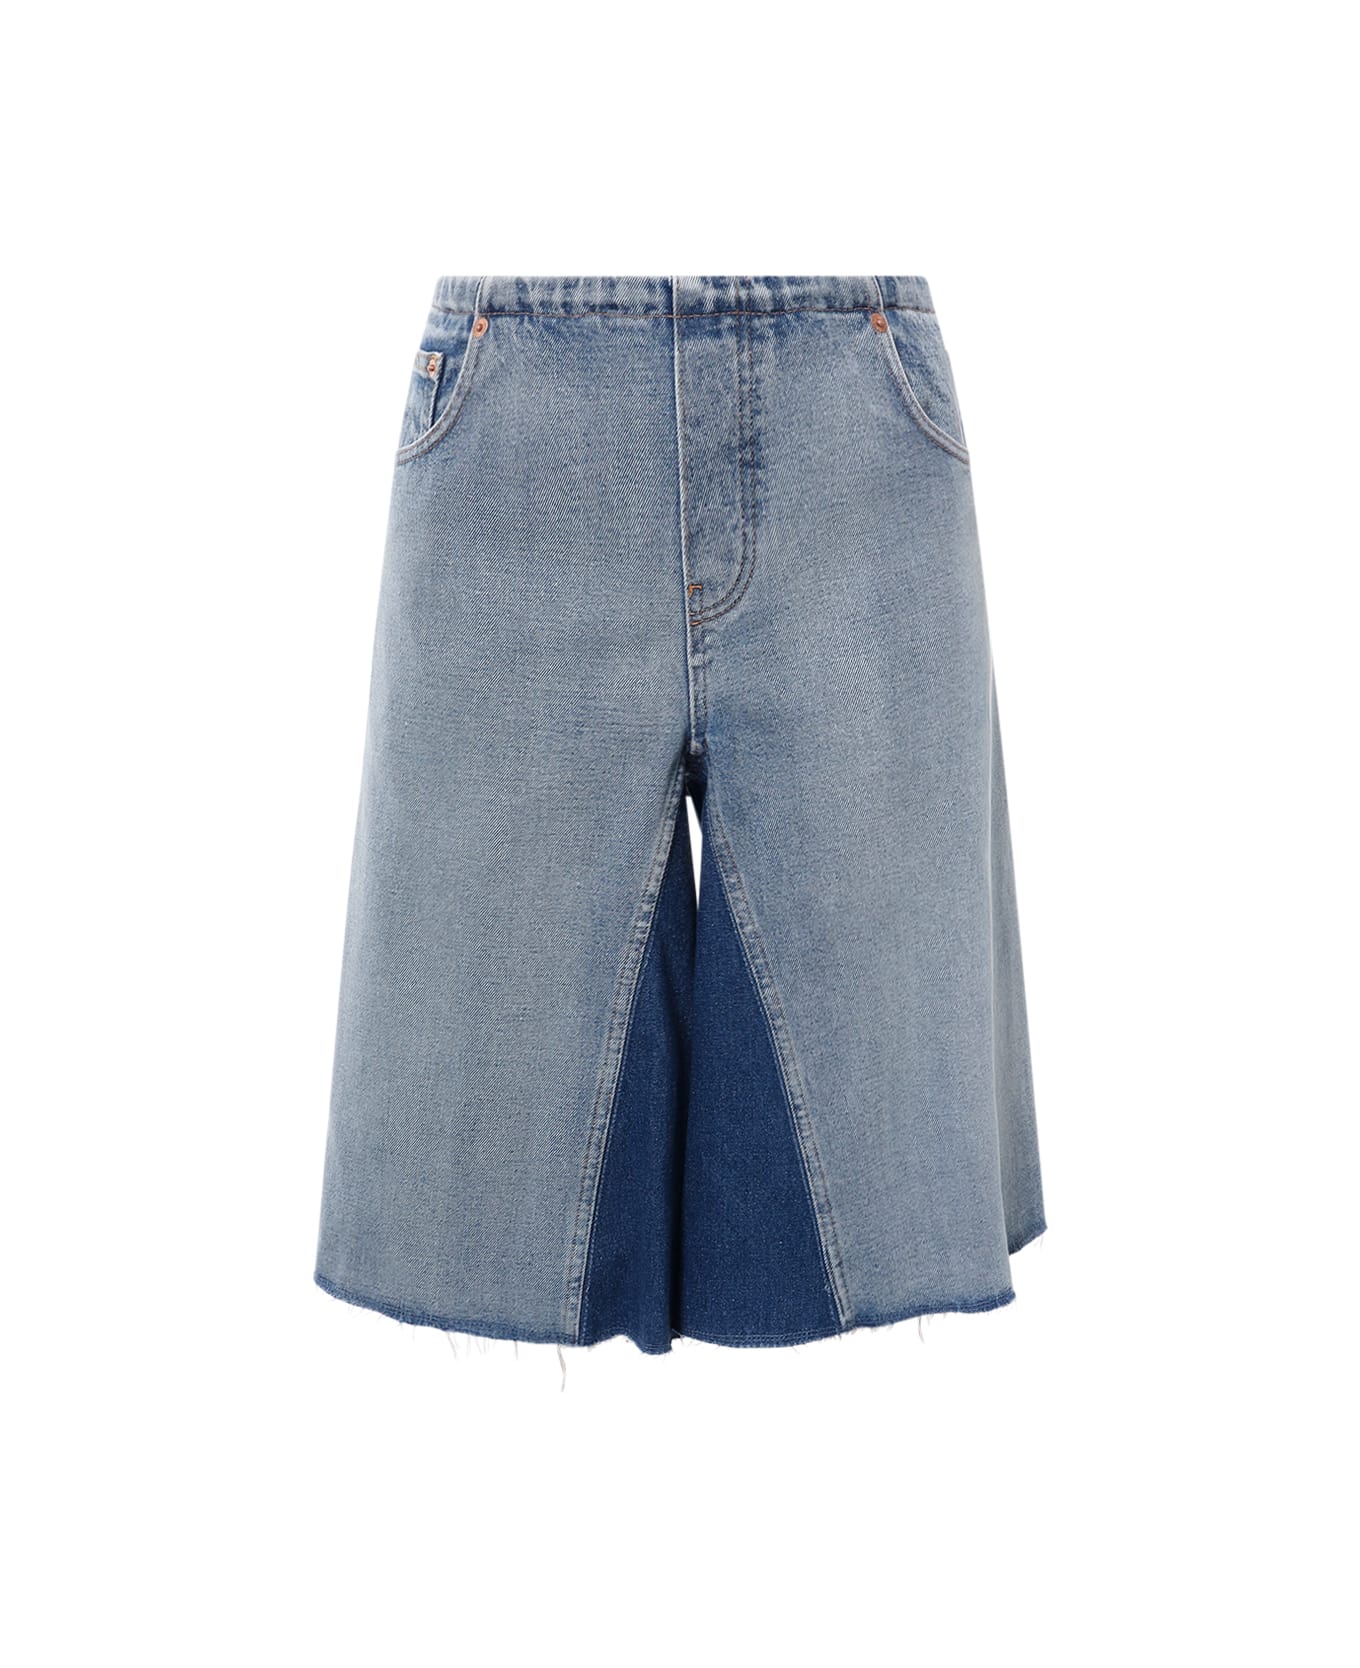 MM6 Maison Margiela Bermuda Shorts - Blue ショートパンツ